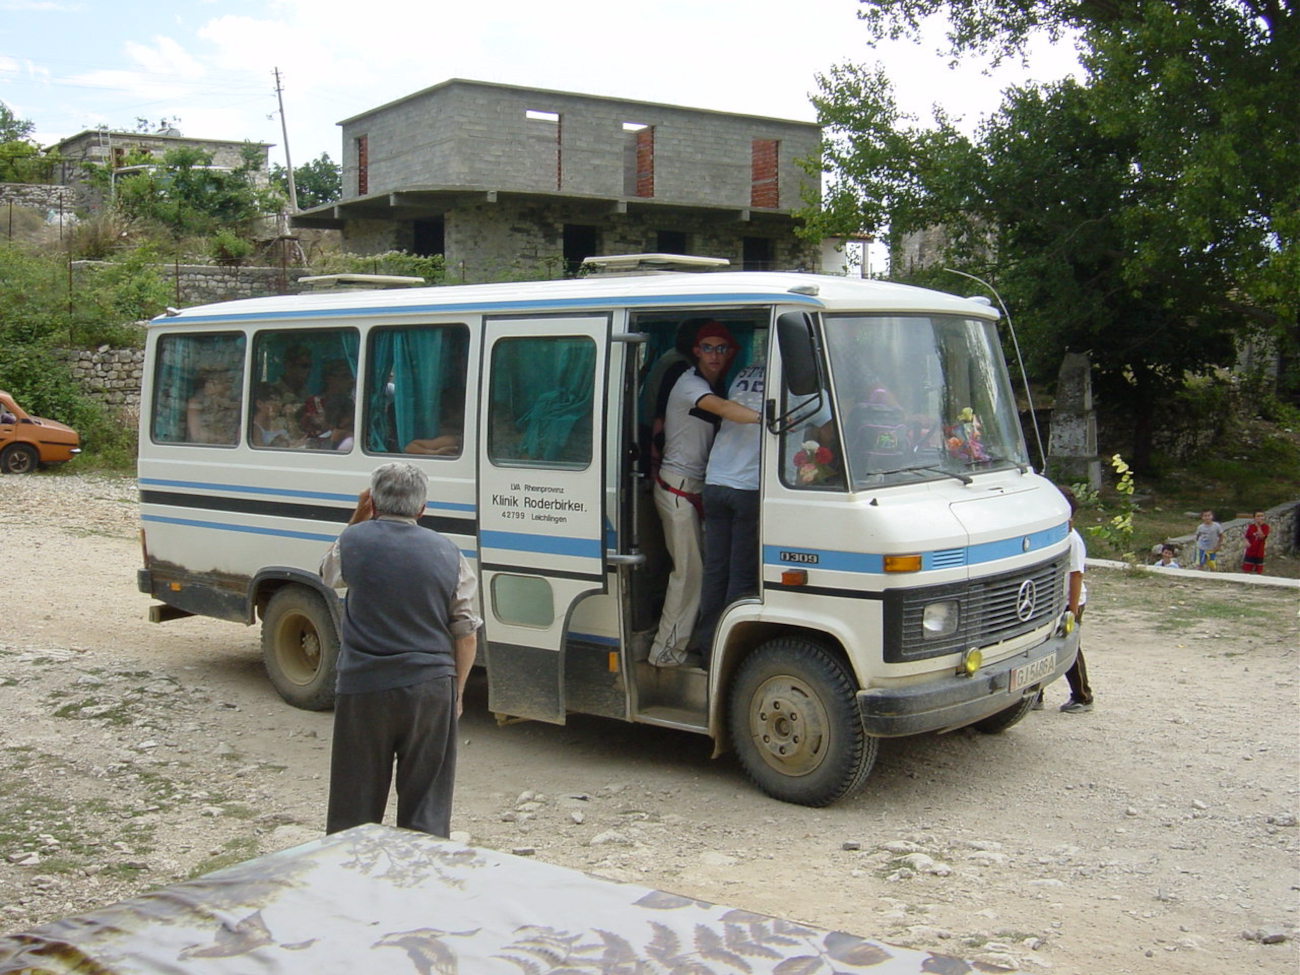 Transport en commun, Albanie méridionale, 2002 © Pierre Sintes